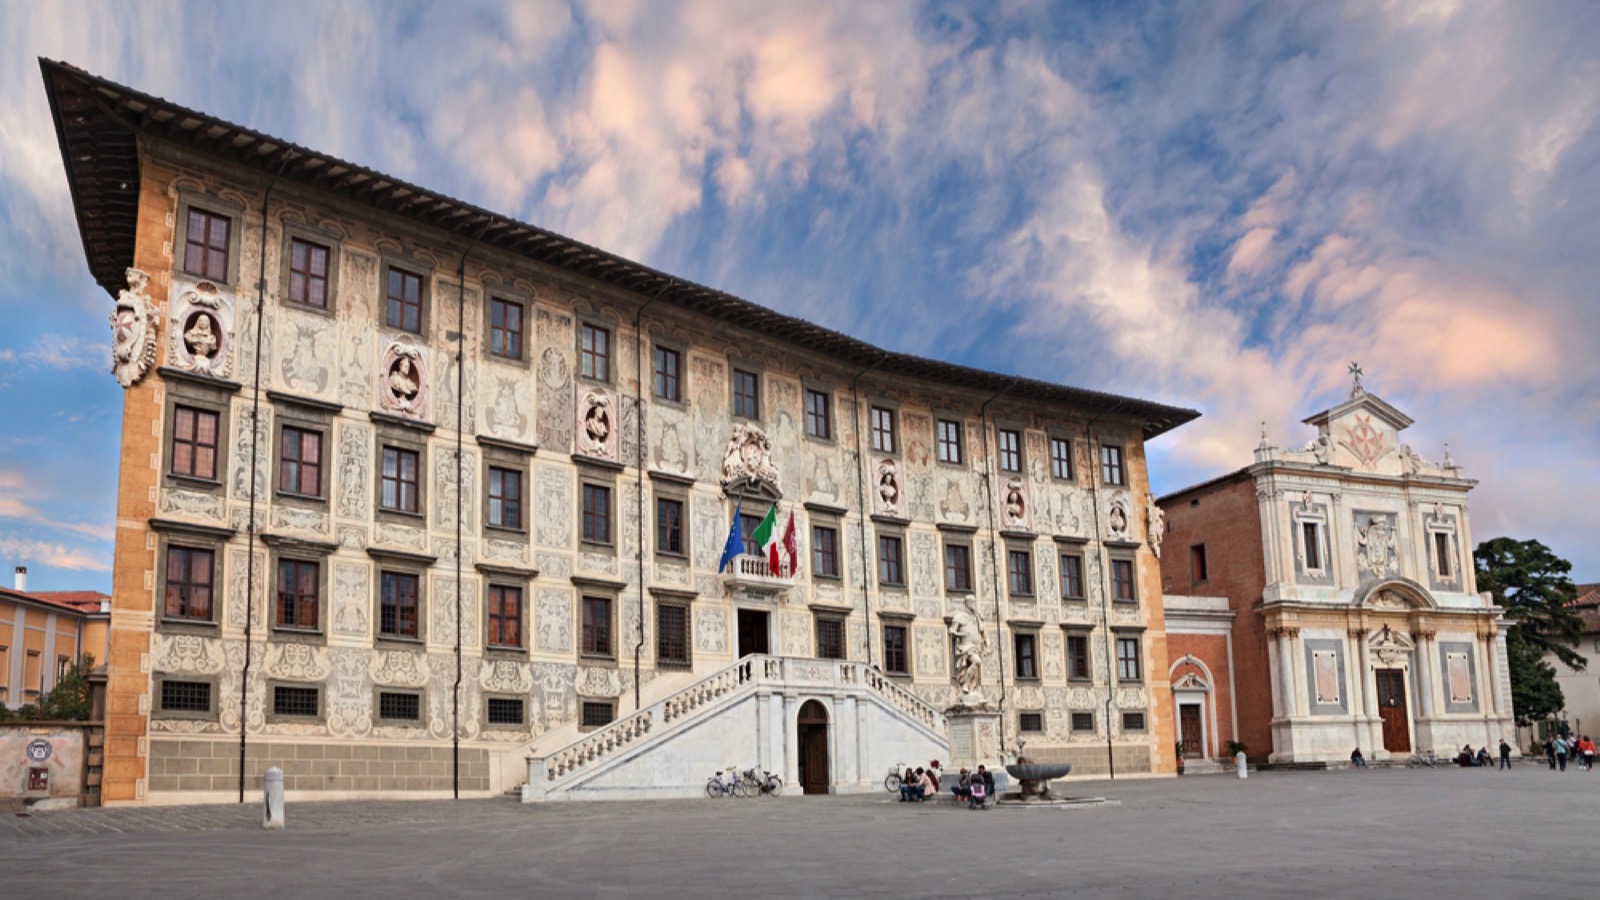 PISA, ITALY - APRIL 18: ancient Palazzo della Carovana built by Giorgio Vasari and church Santo Stefano in Piazza dei Cavalieri (Knight's Square). Photo taken on April 18, 2015 in Pisa, Tuscany Italy